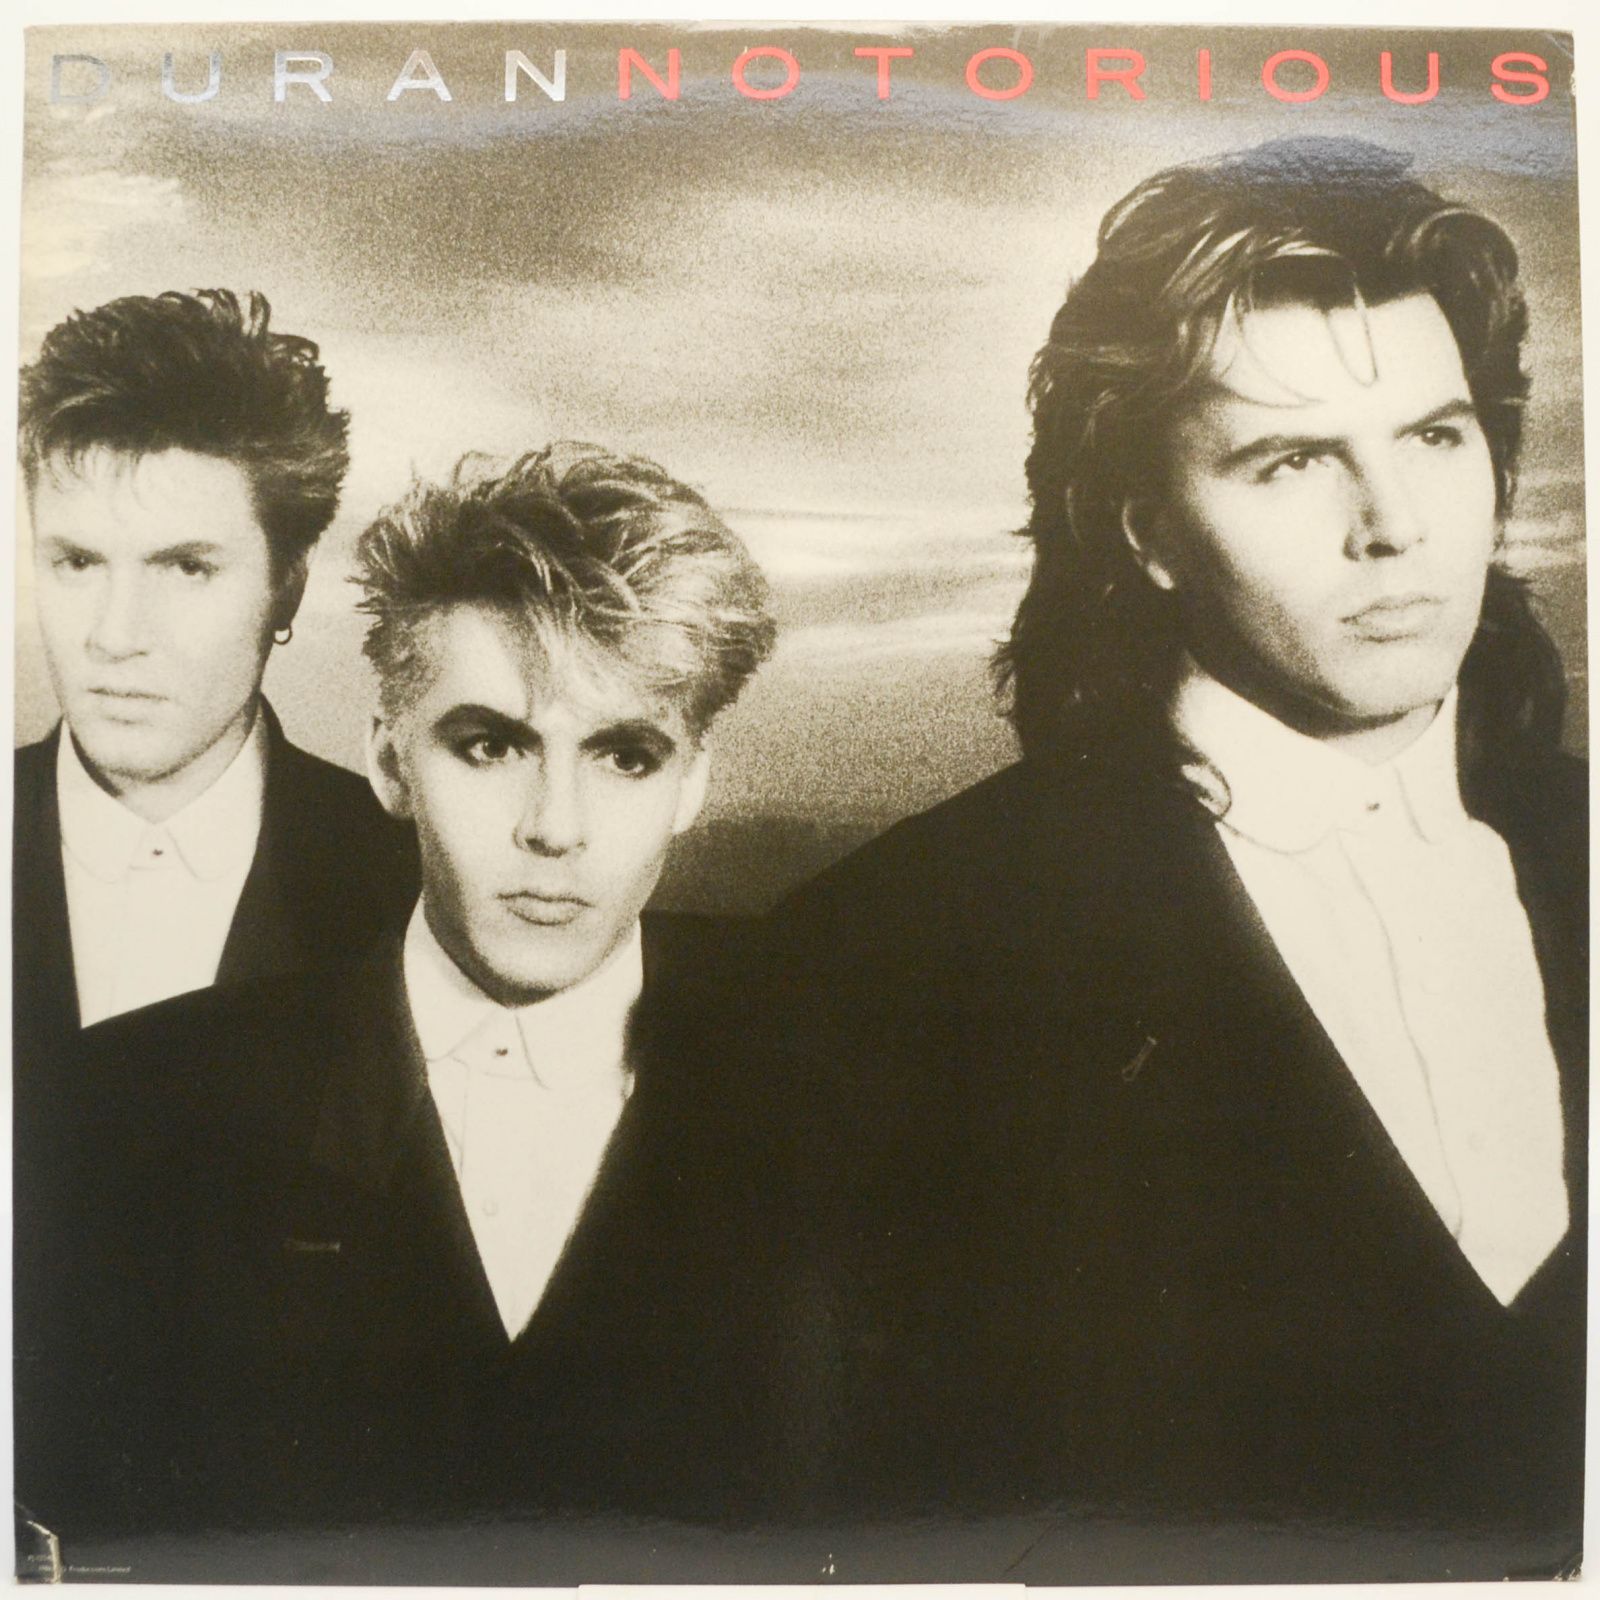 Duran Duran — Notorious (USA), 1986